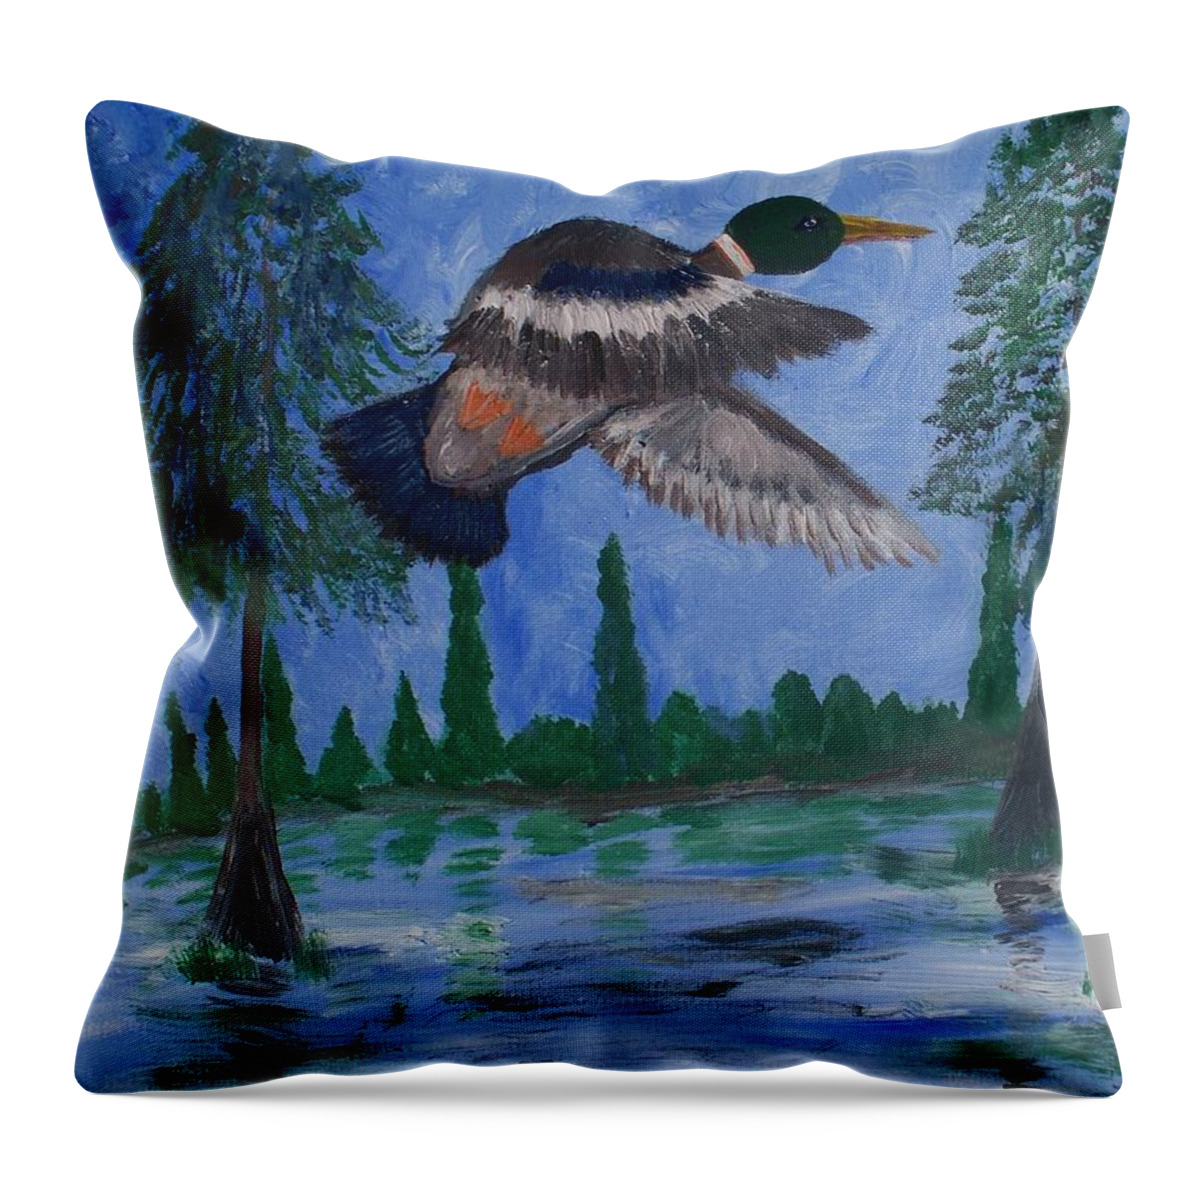 Mallard Over Swamp Throw Pillow featuring the painting Mallard Over Swamp by Seaux-N-Seau Soileau